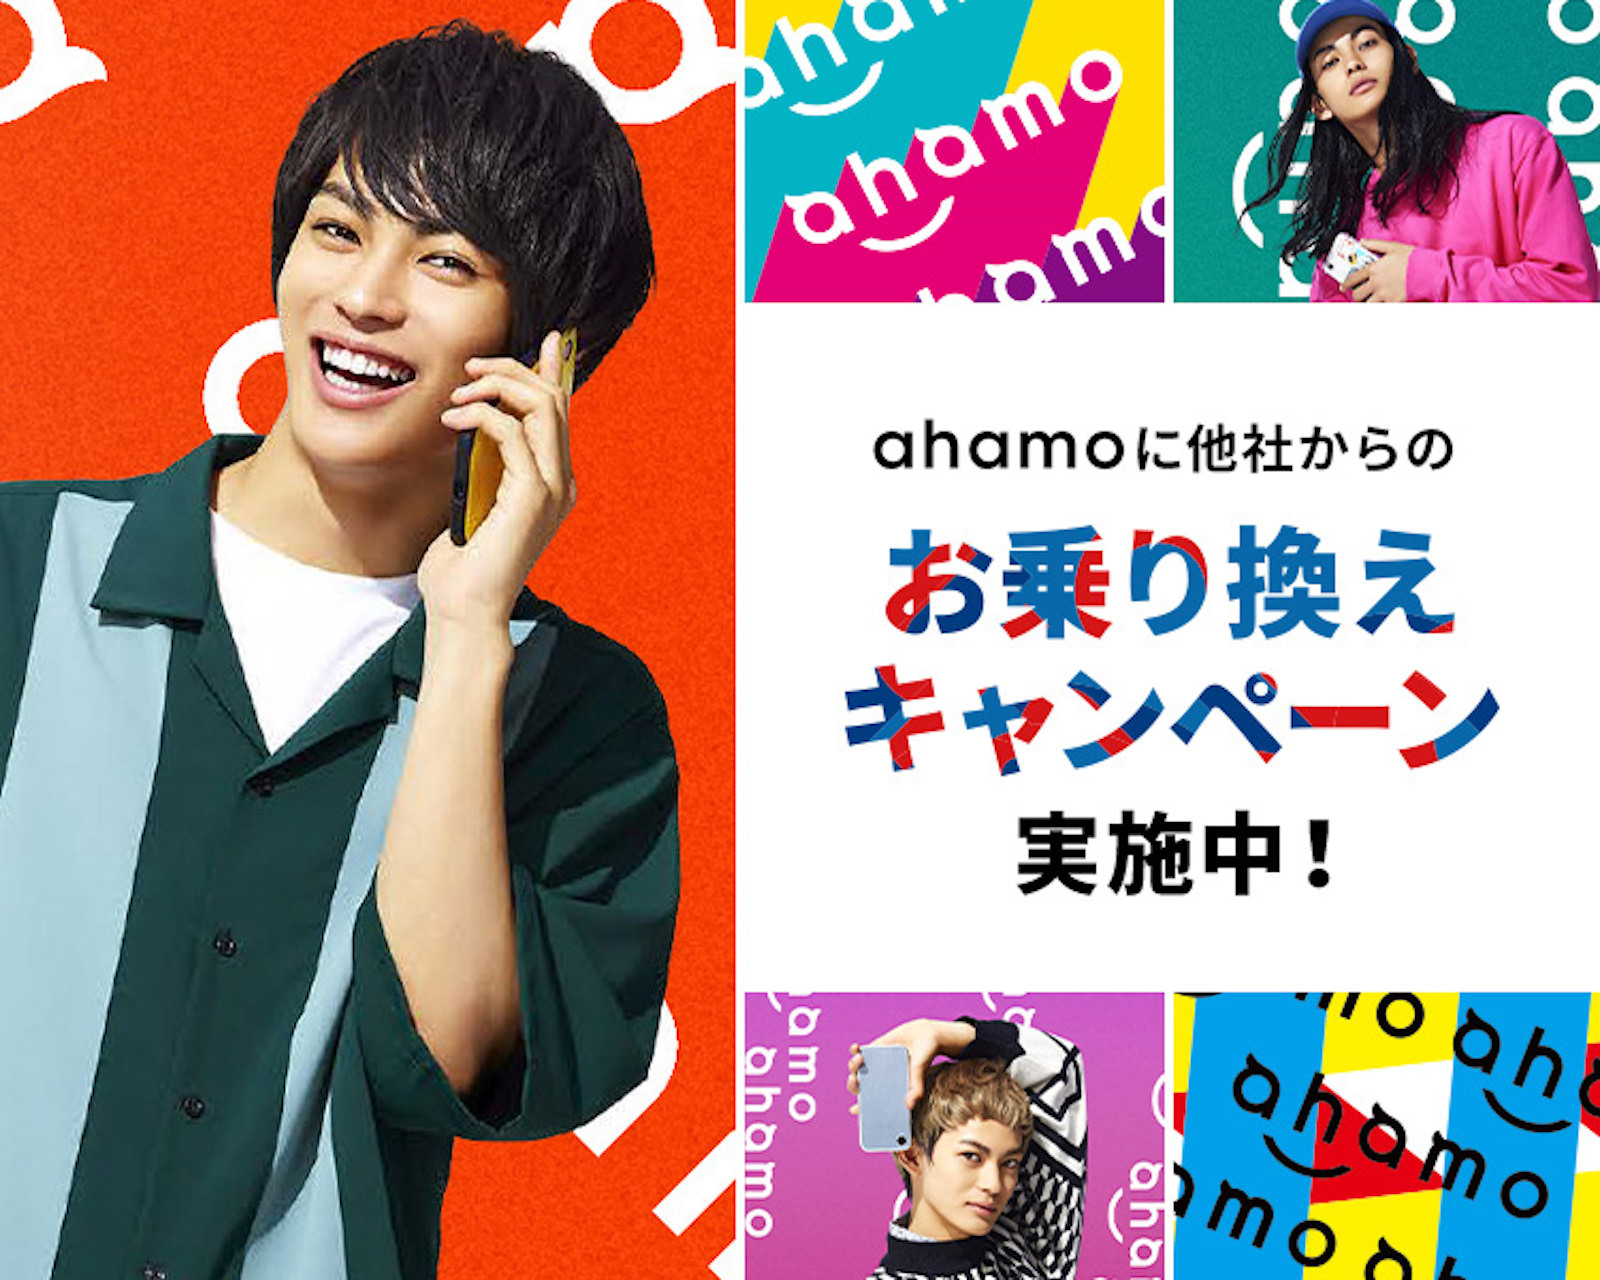 Ahamo norikae campaign